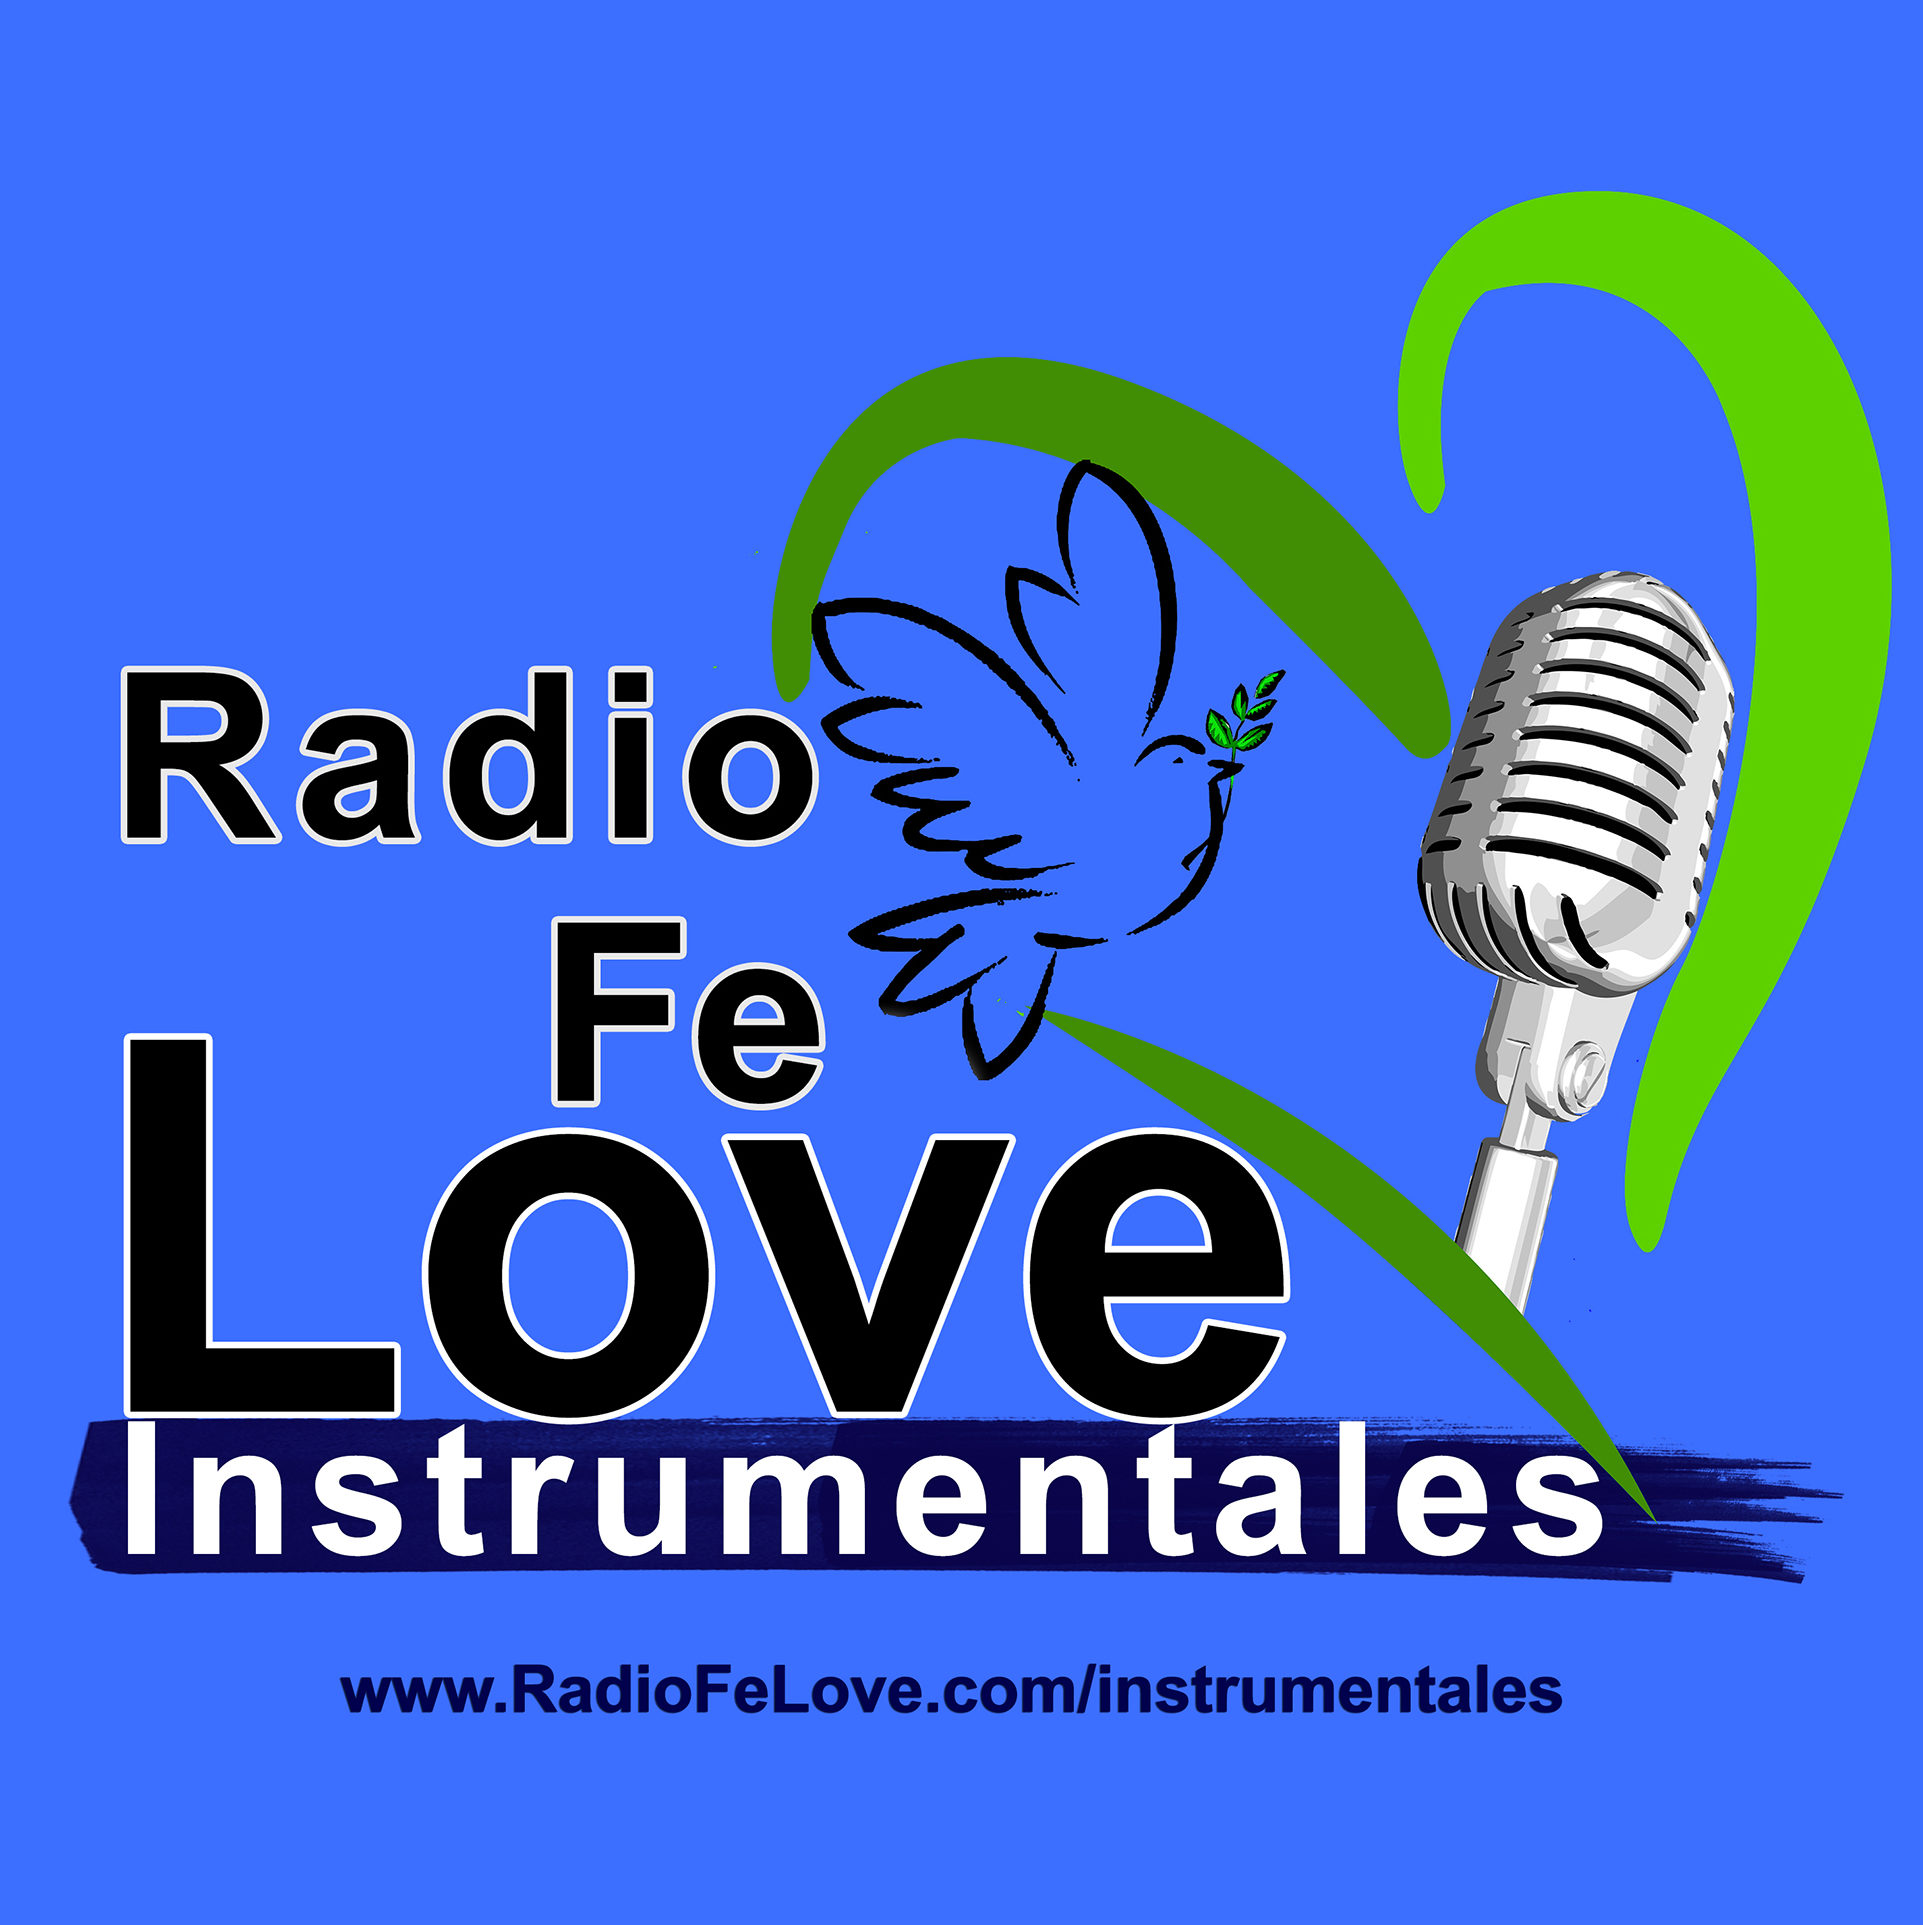 Radio FeLove Instrumentales